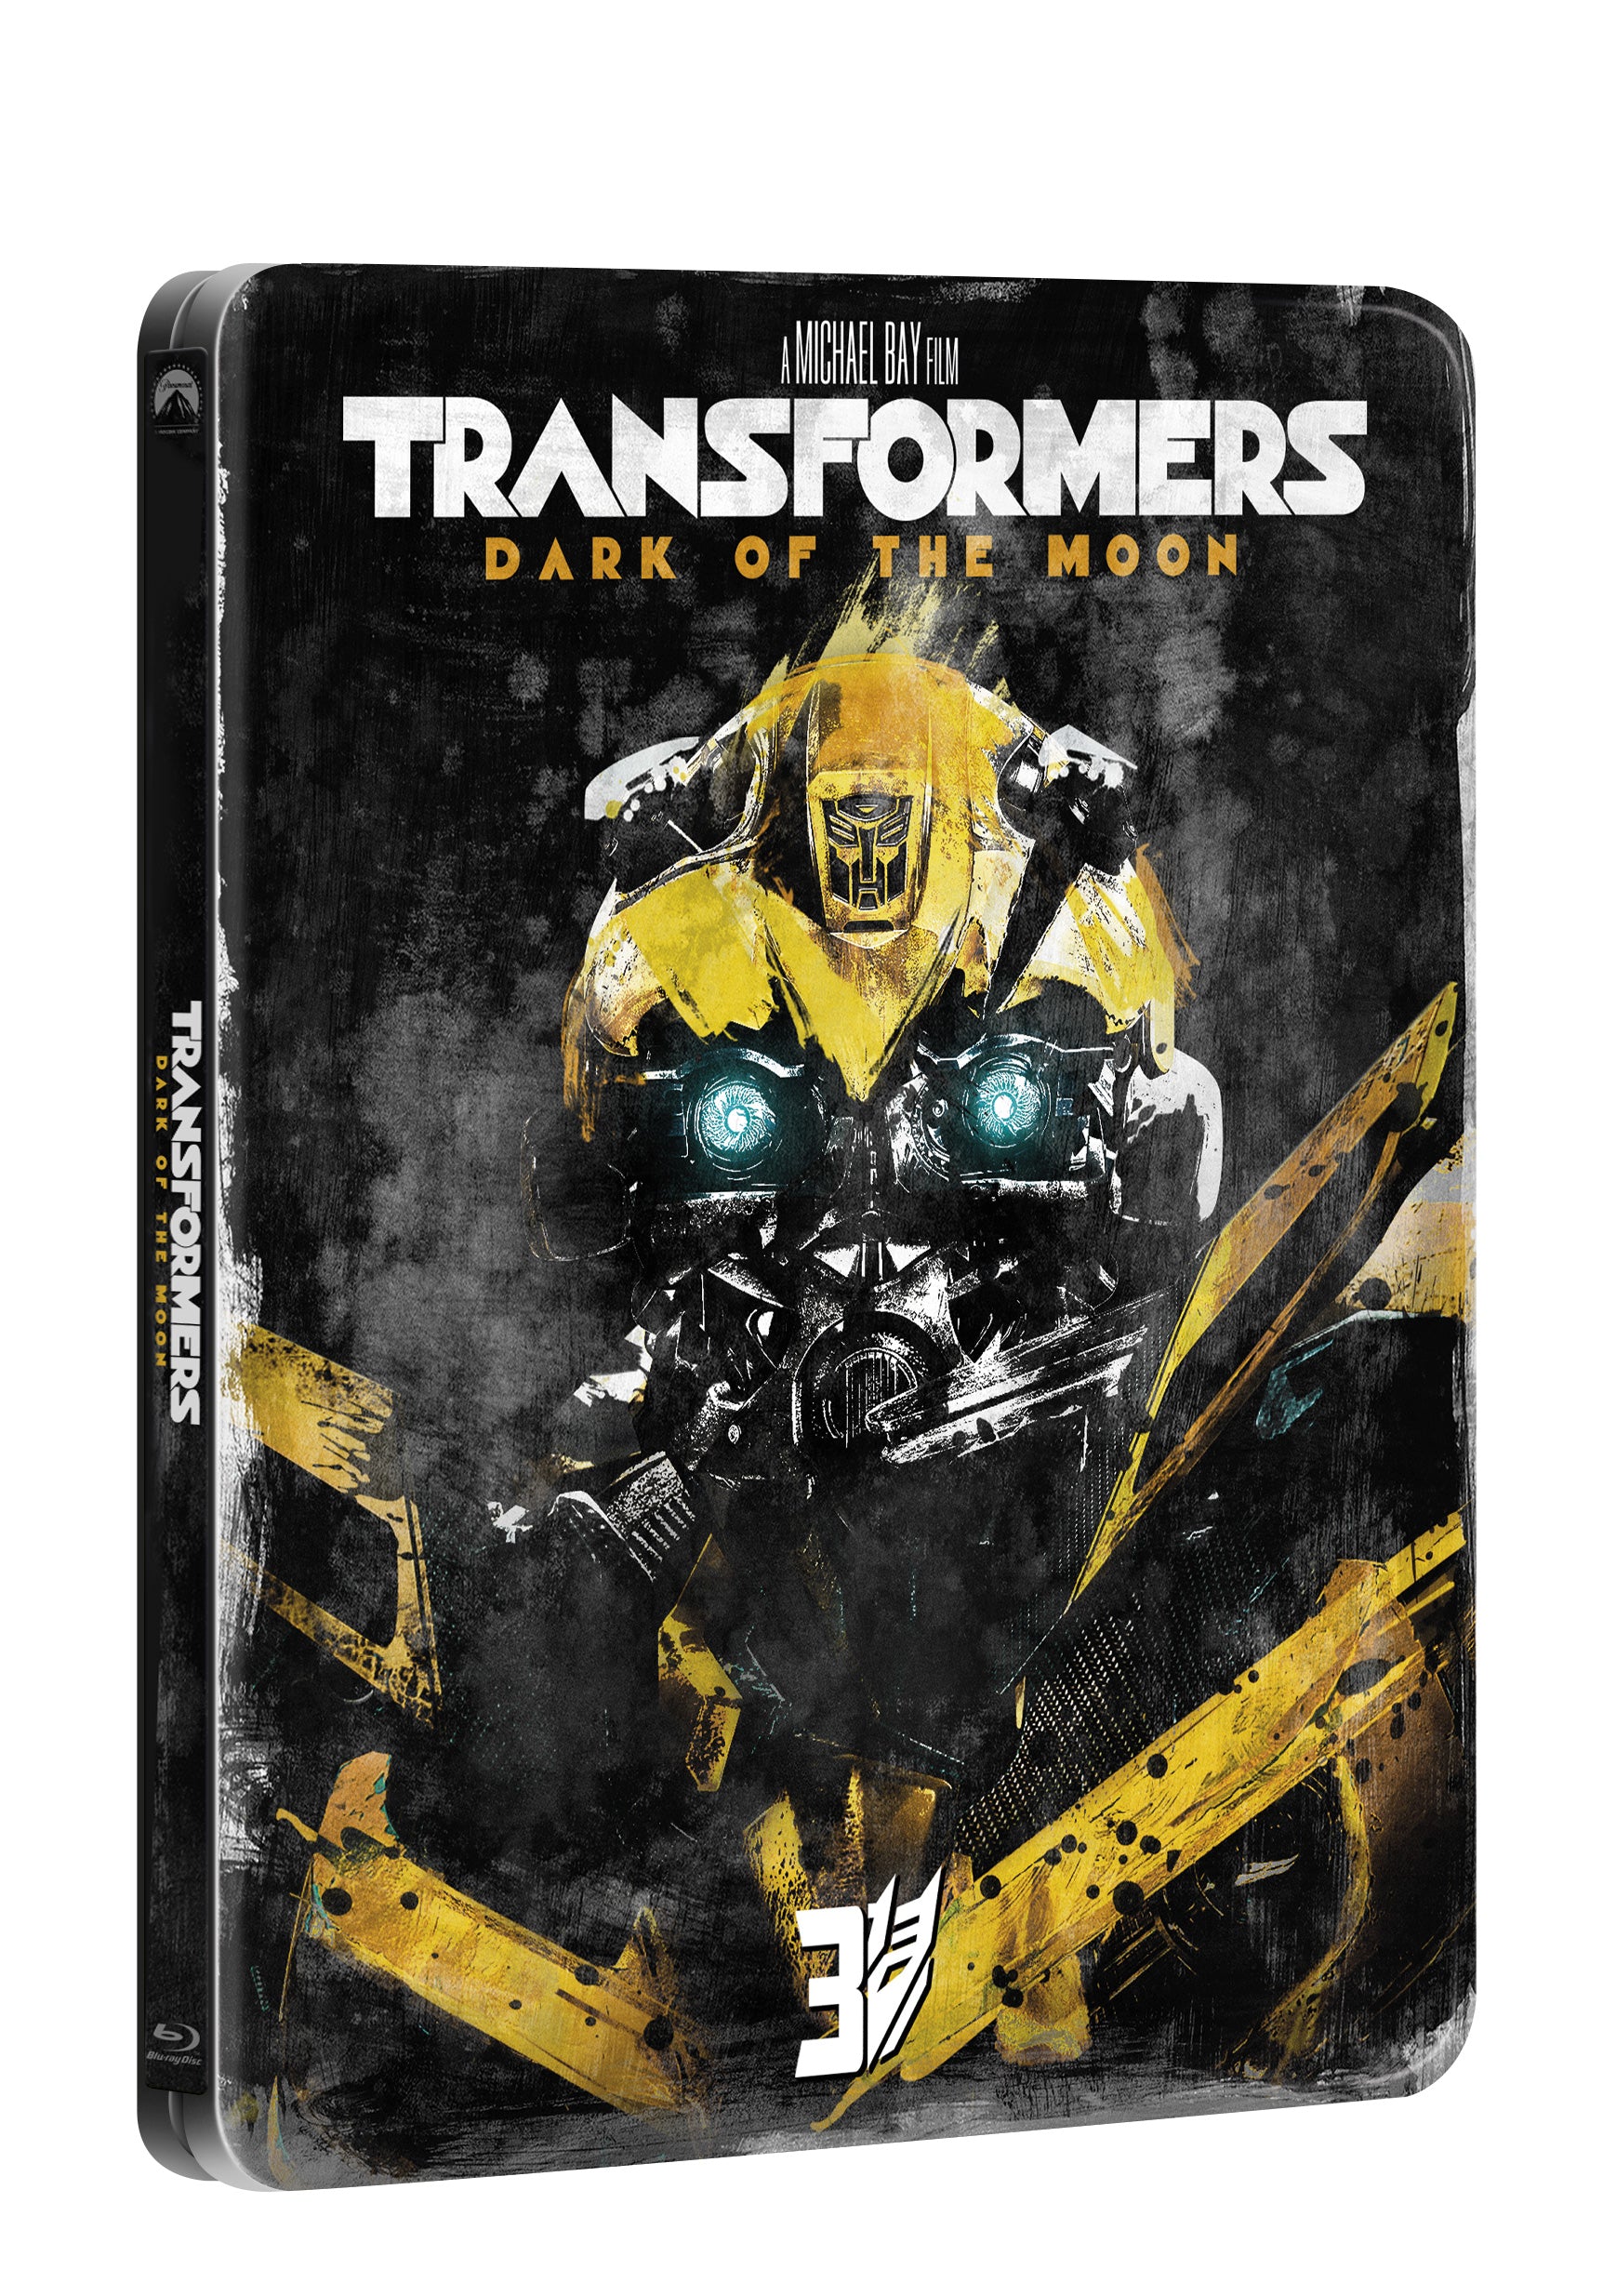 Transformers 3. BD - Edice 10 let - steelbook / Transformers: The Dark of the Moon - Czech version